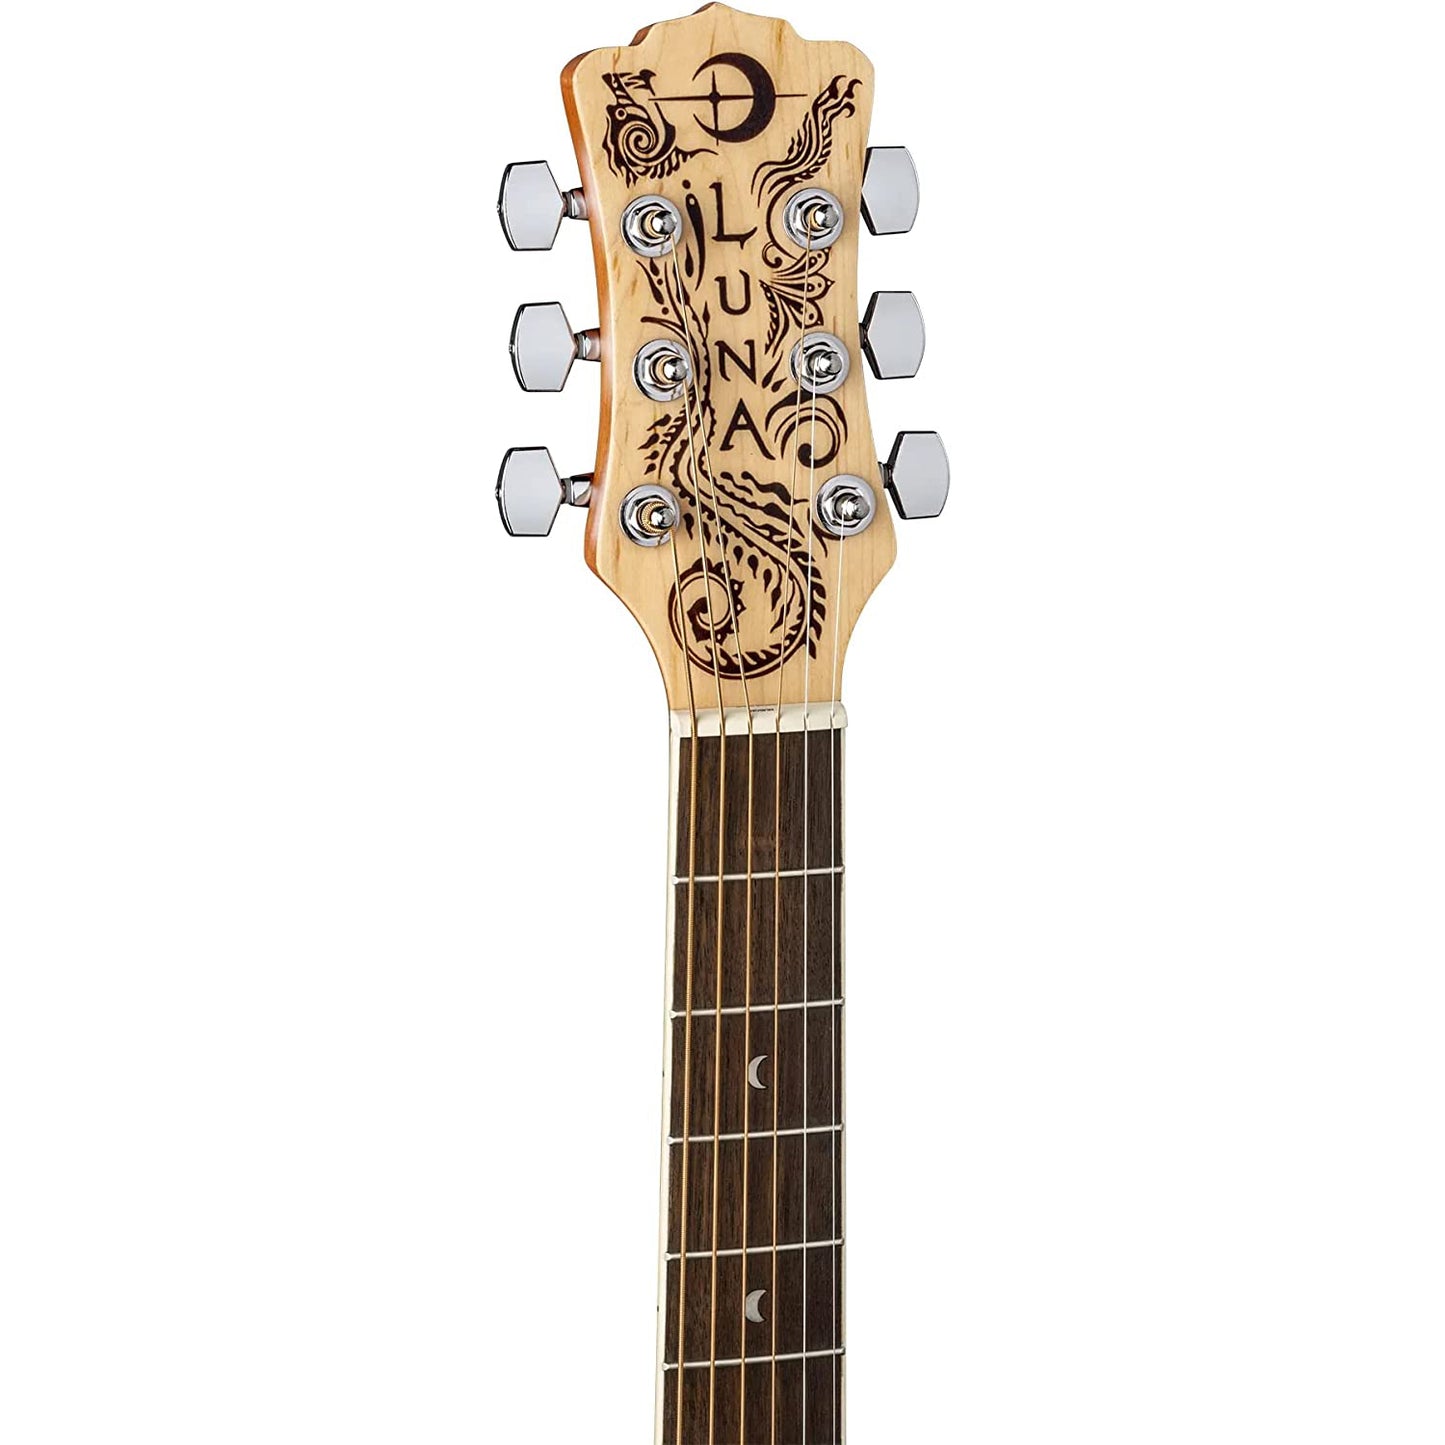 Luna Guitars Henna Dragon 6 String Spruce Acoustic/Electric Guitar